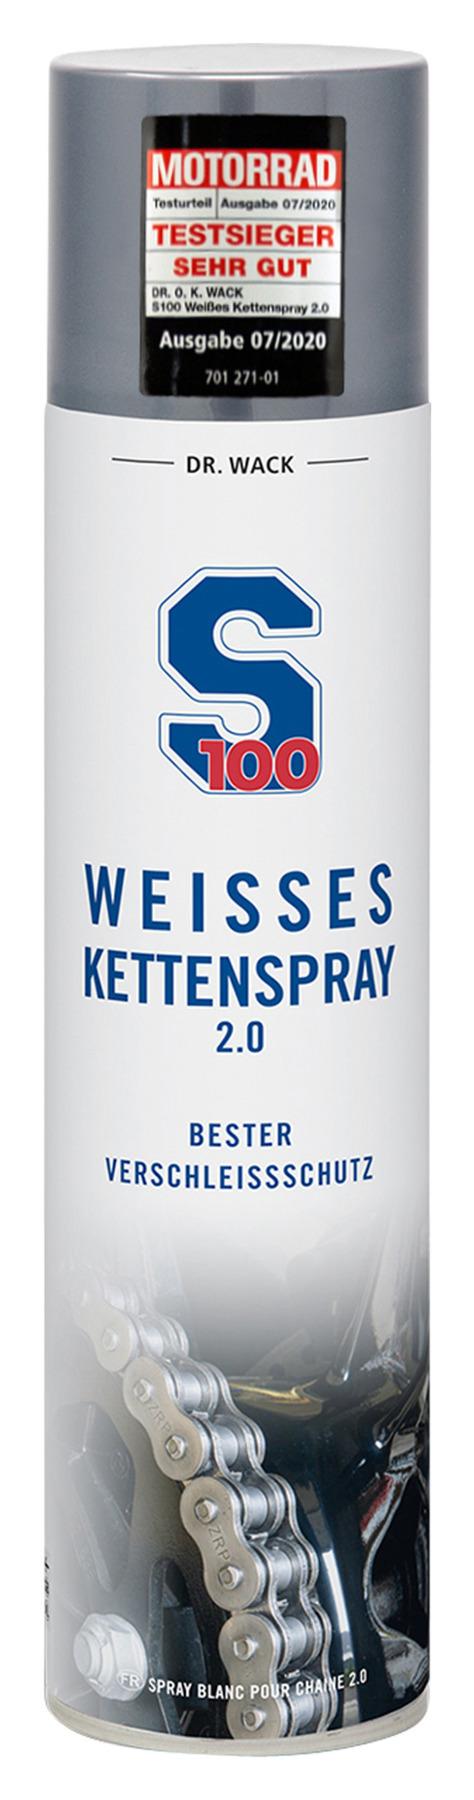 S100 Weisses Kettenspray 2.0